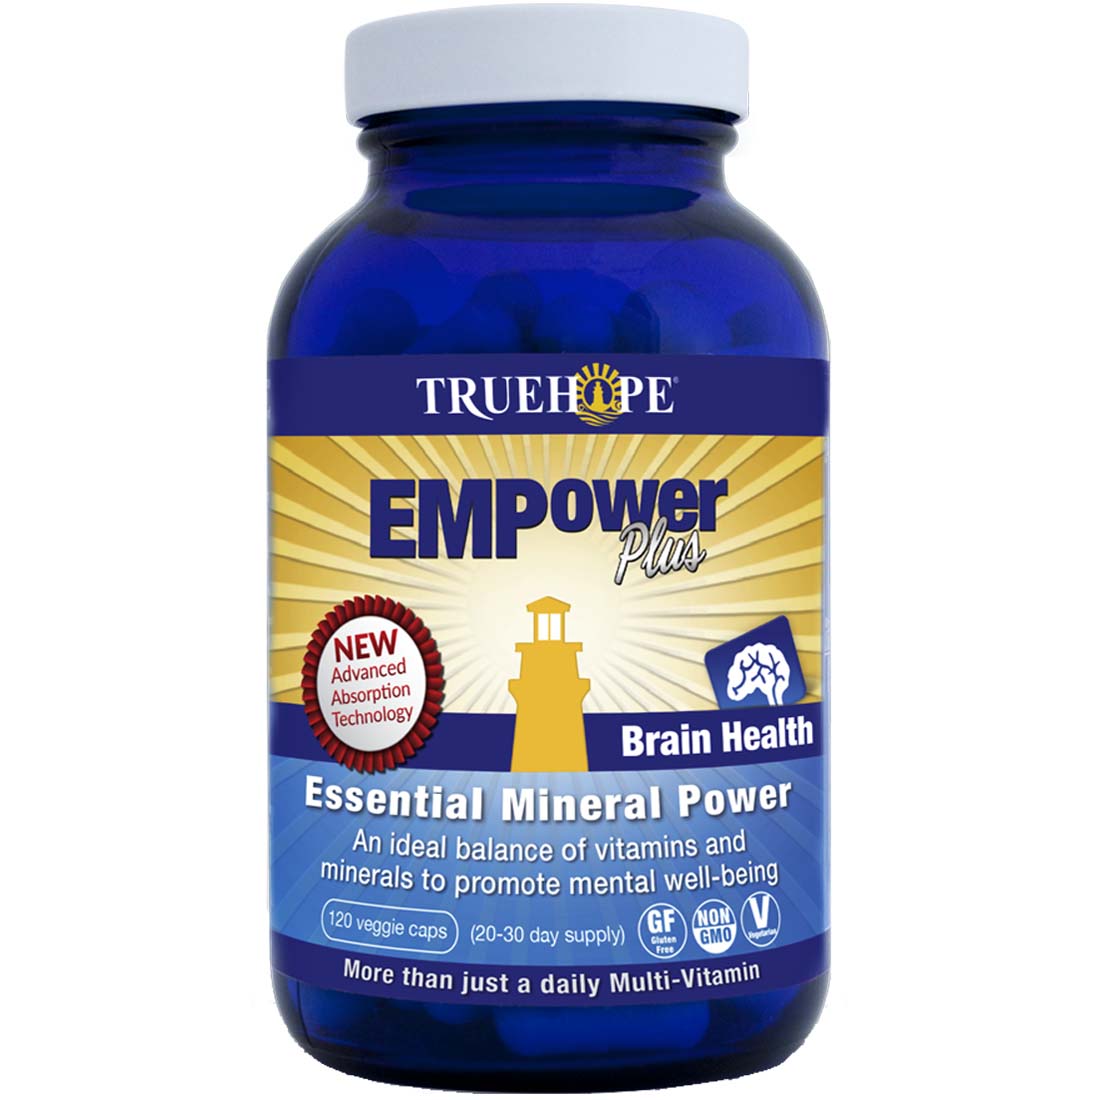 TrueHope Empowerplus EMP Advanced Multivitamin for Brain Health, 120 Capsules